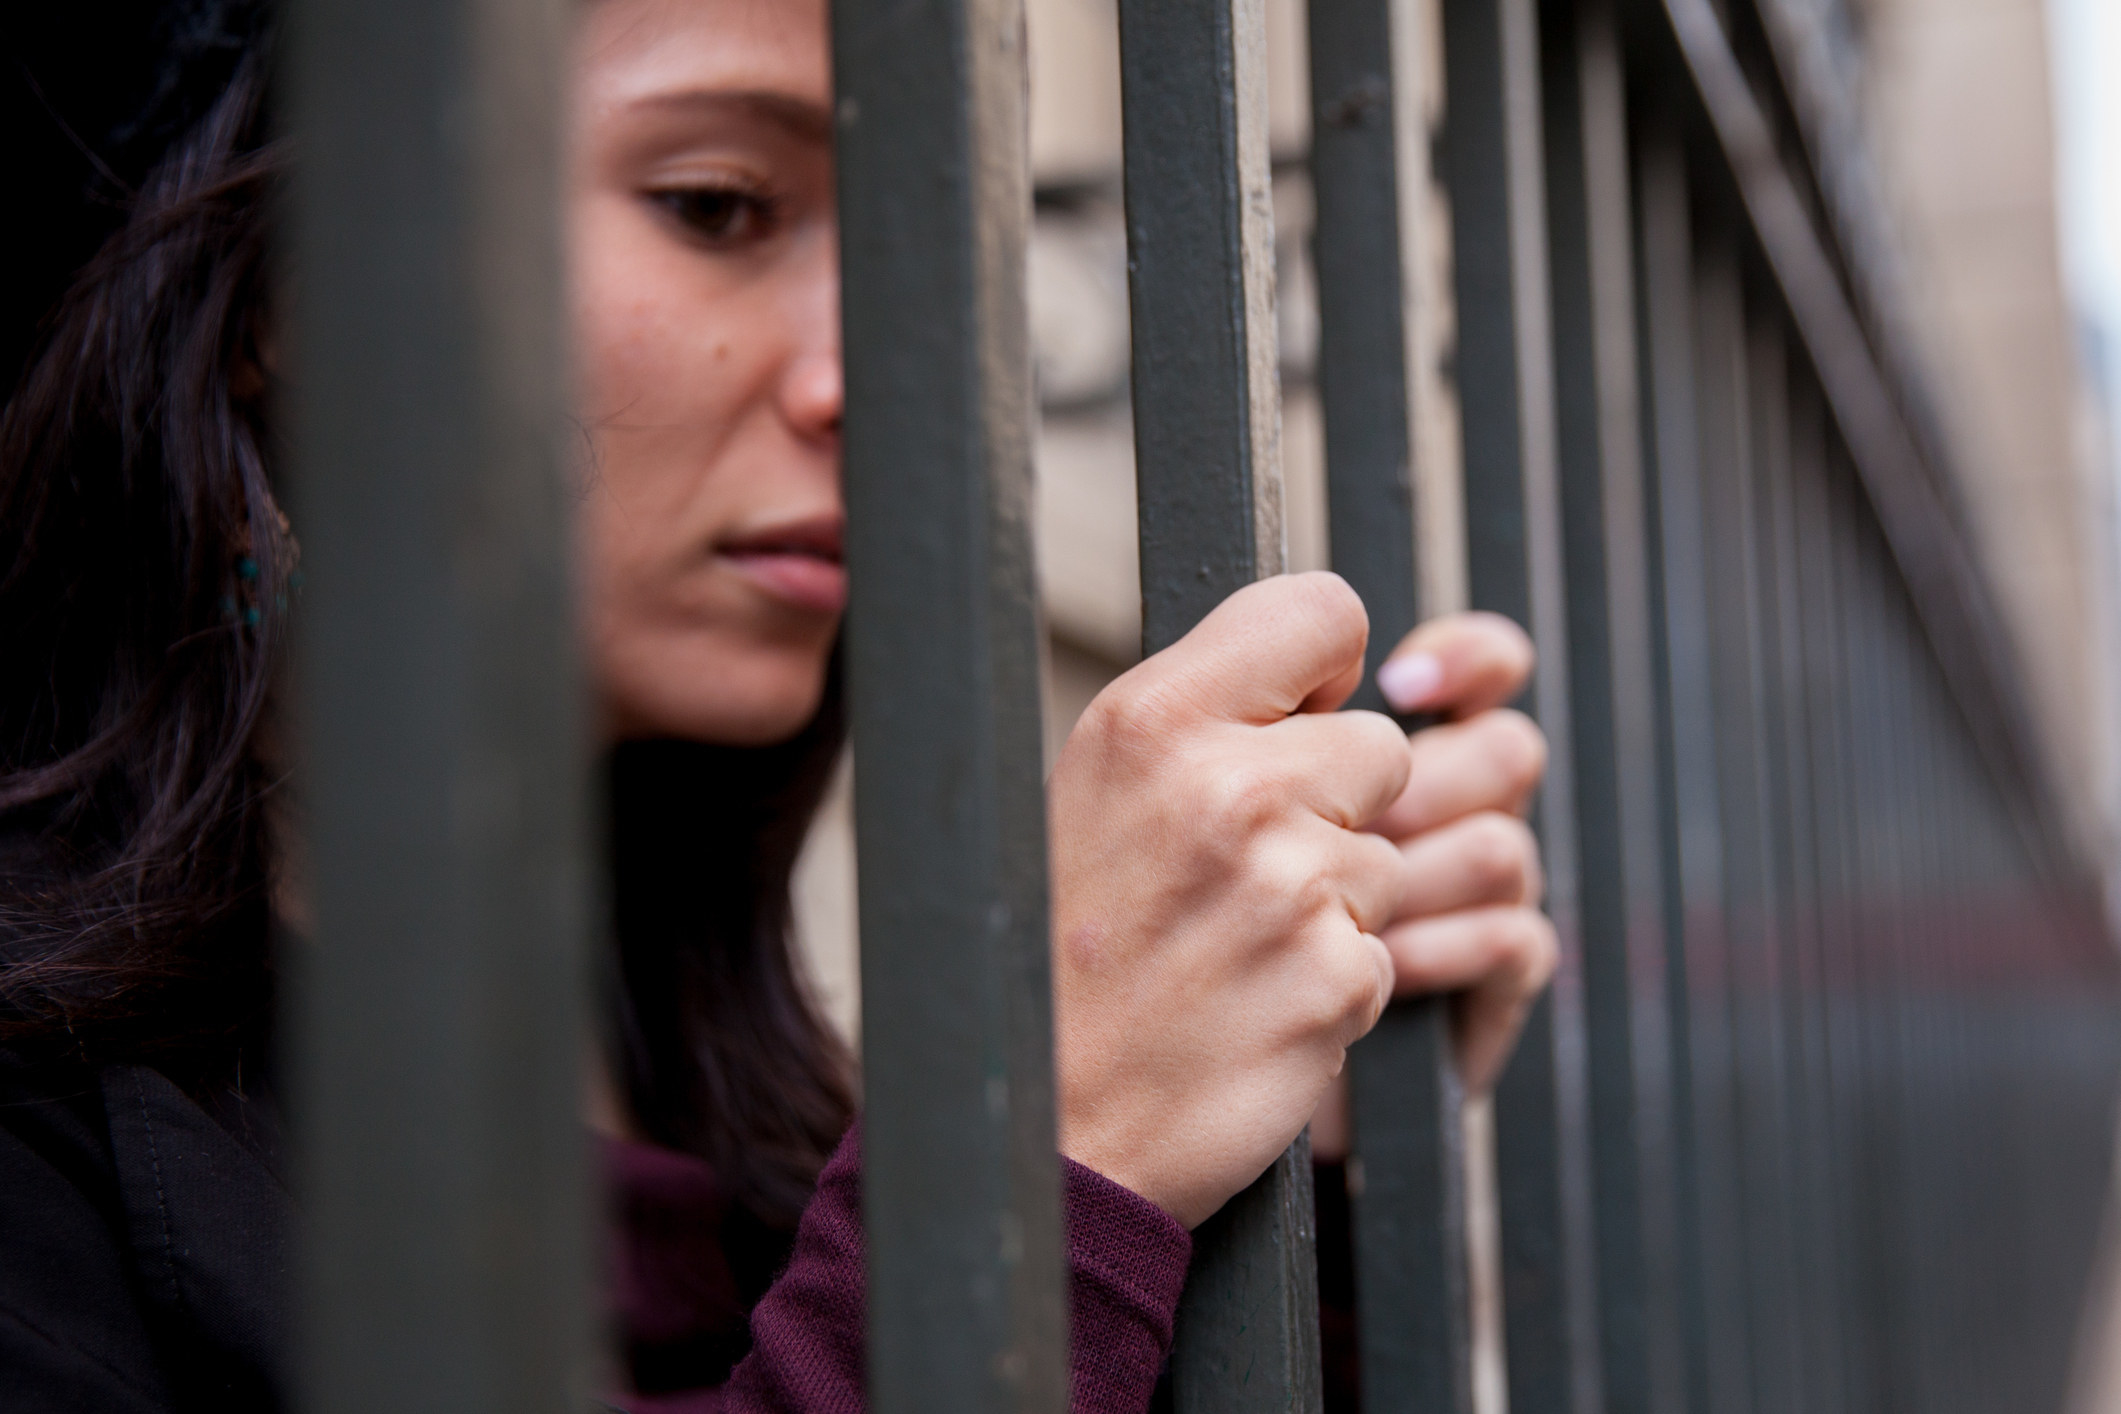 A woman looking sad behind bars